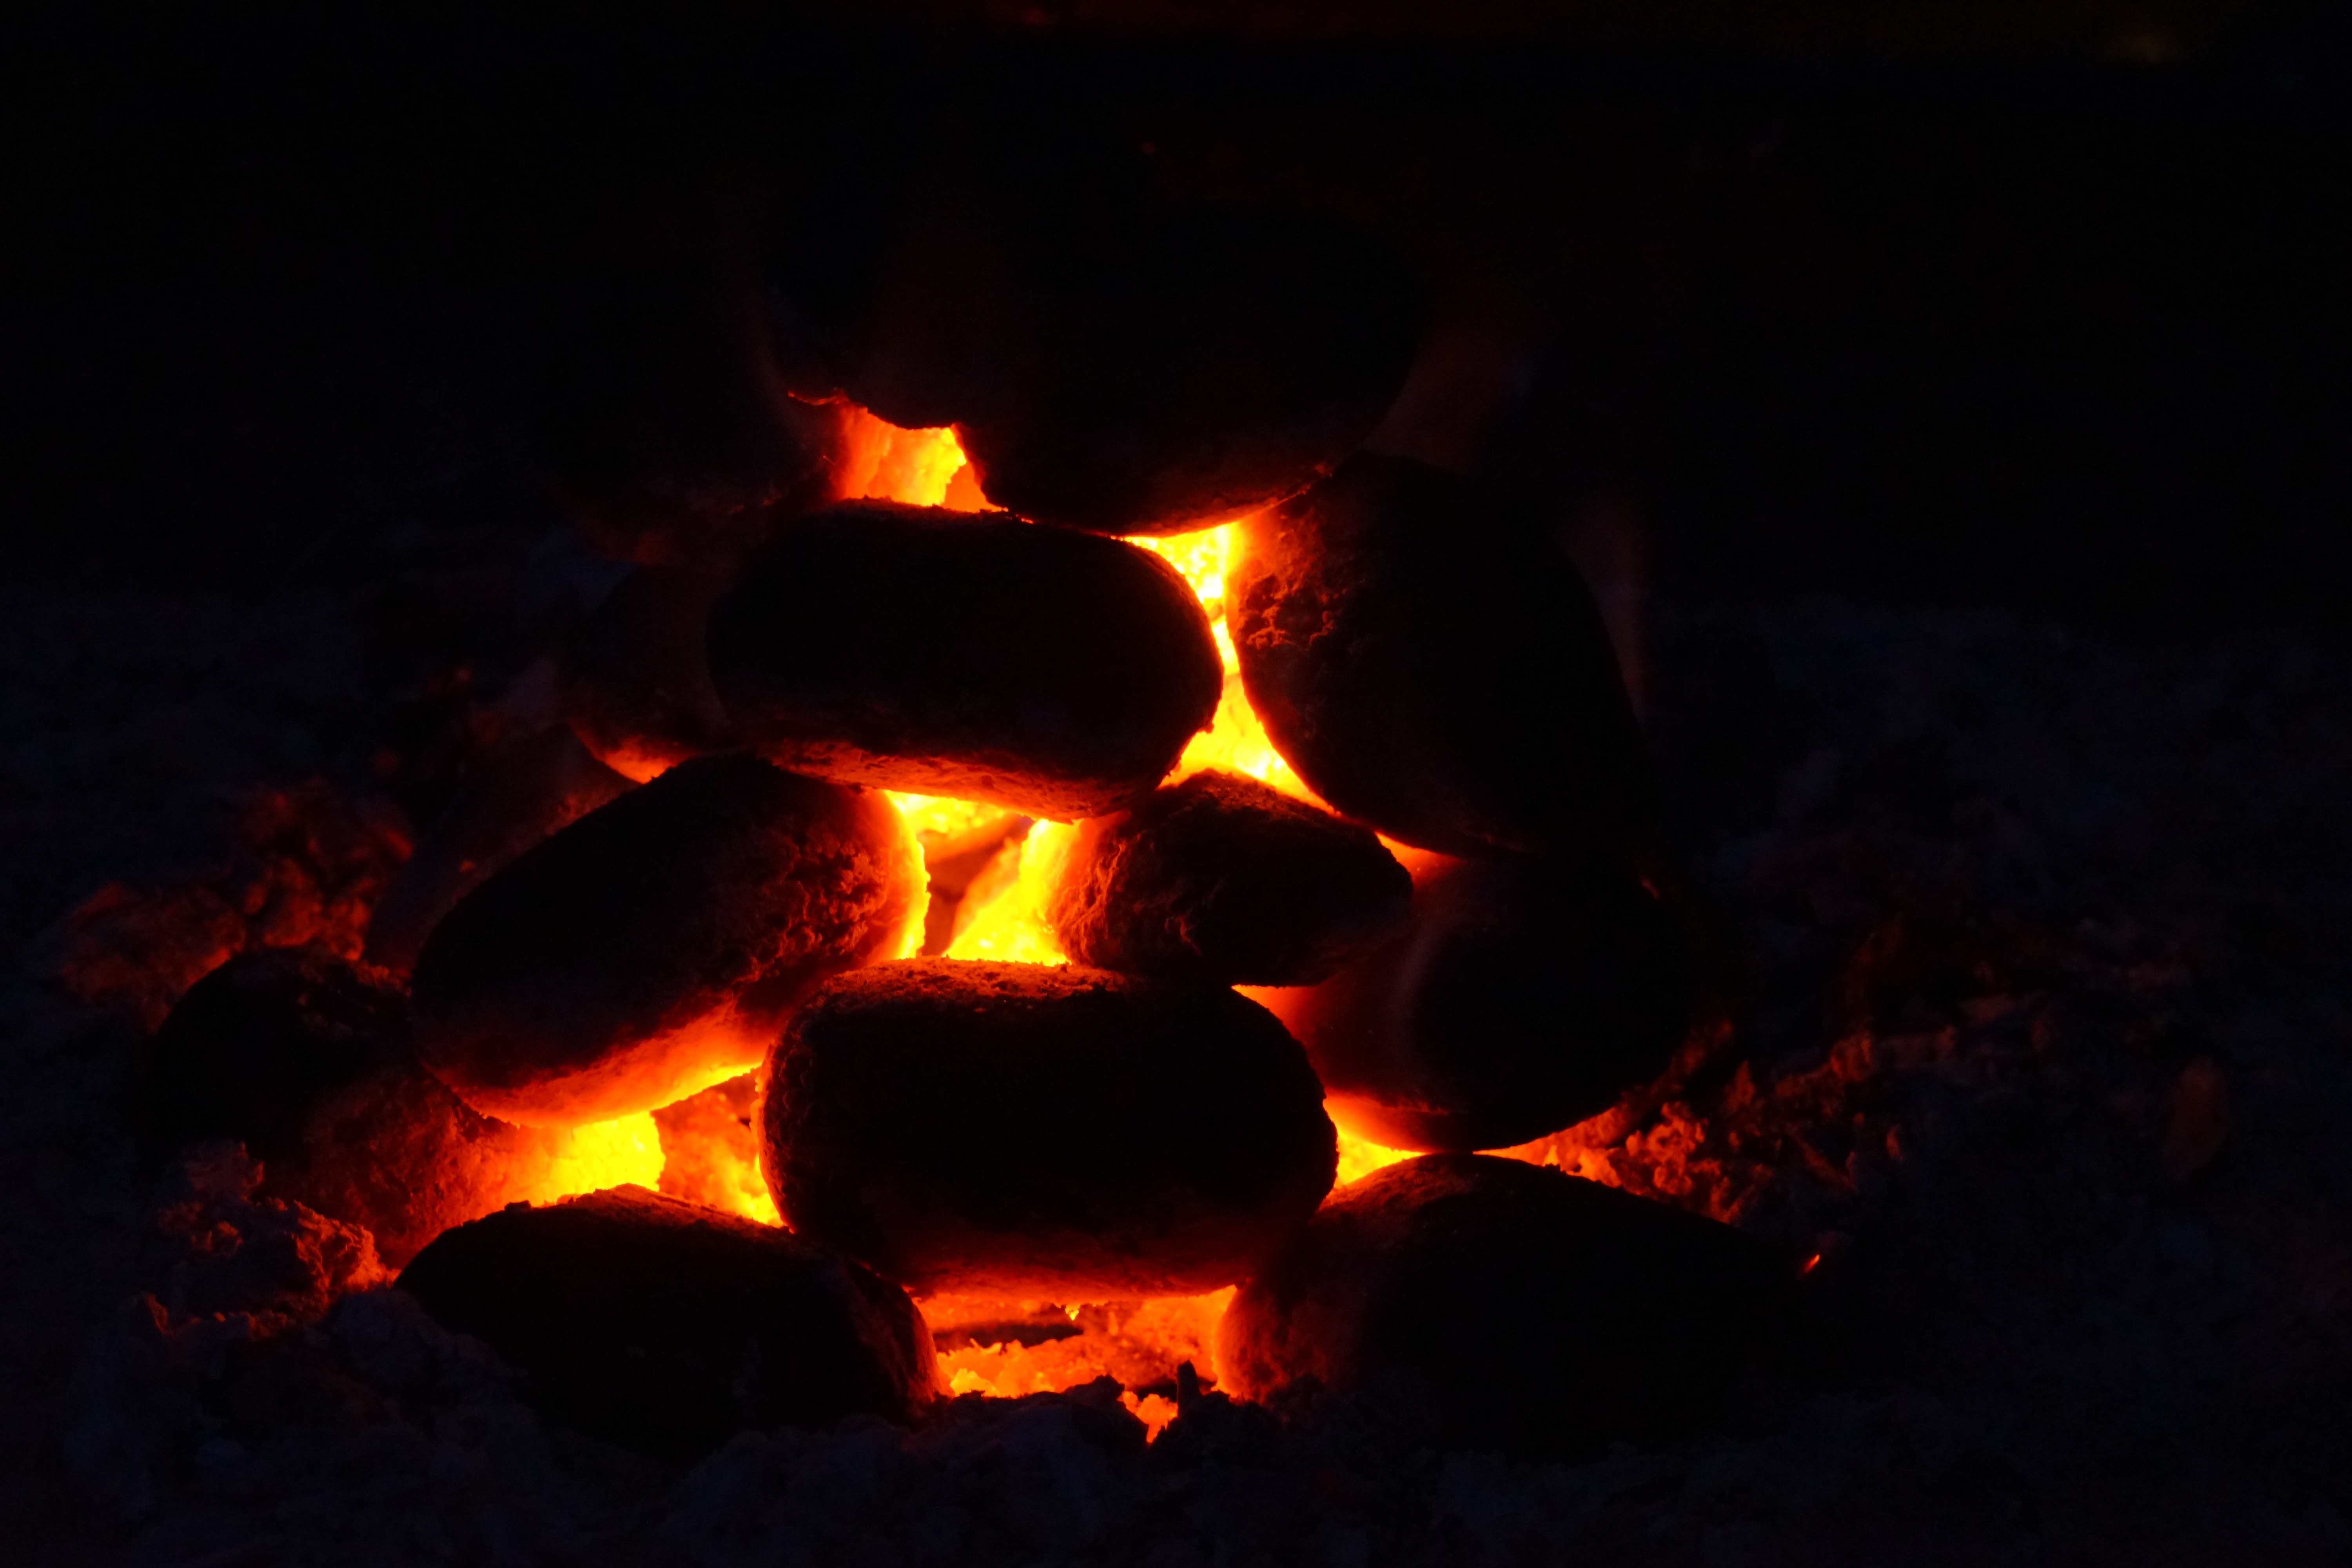 lighted bonfire